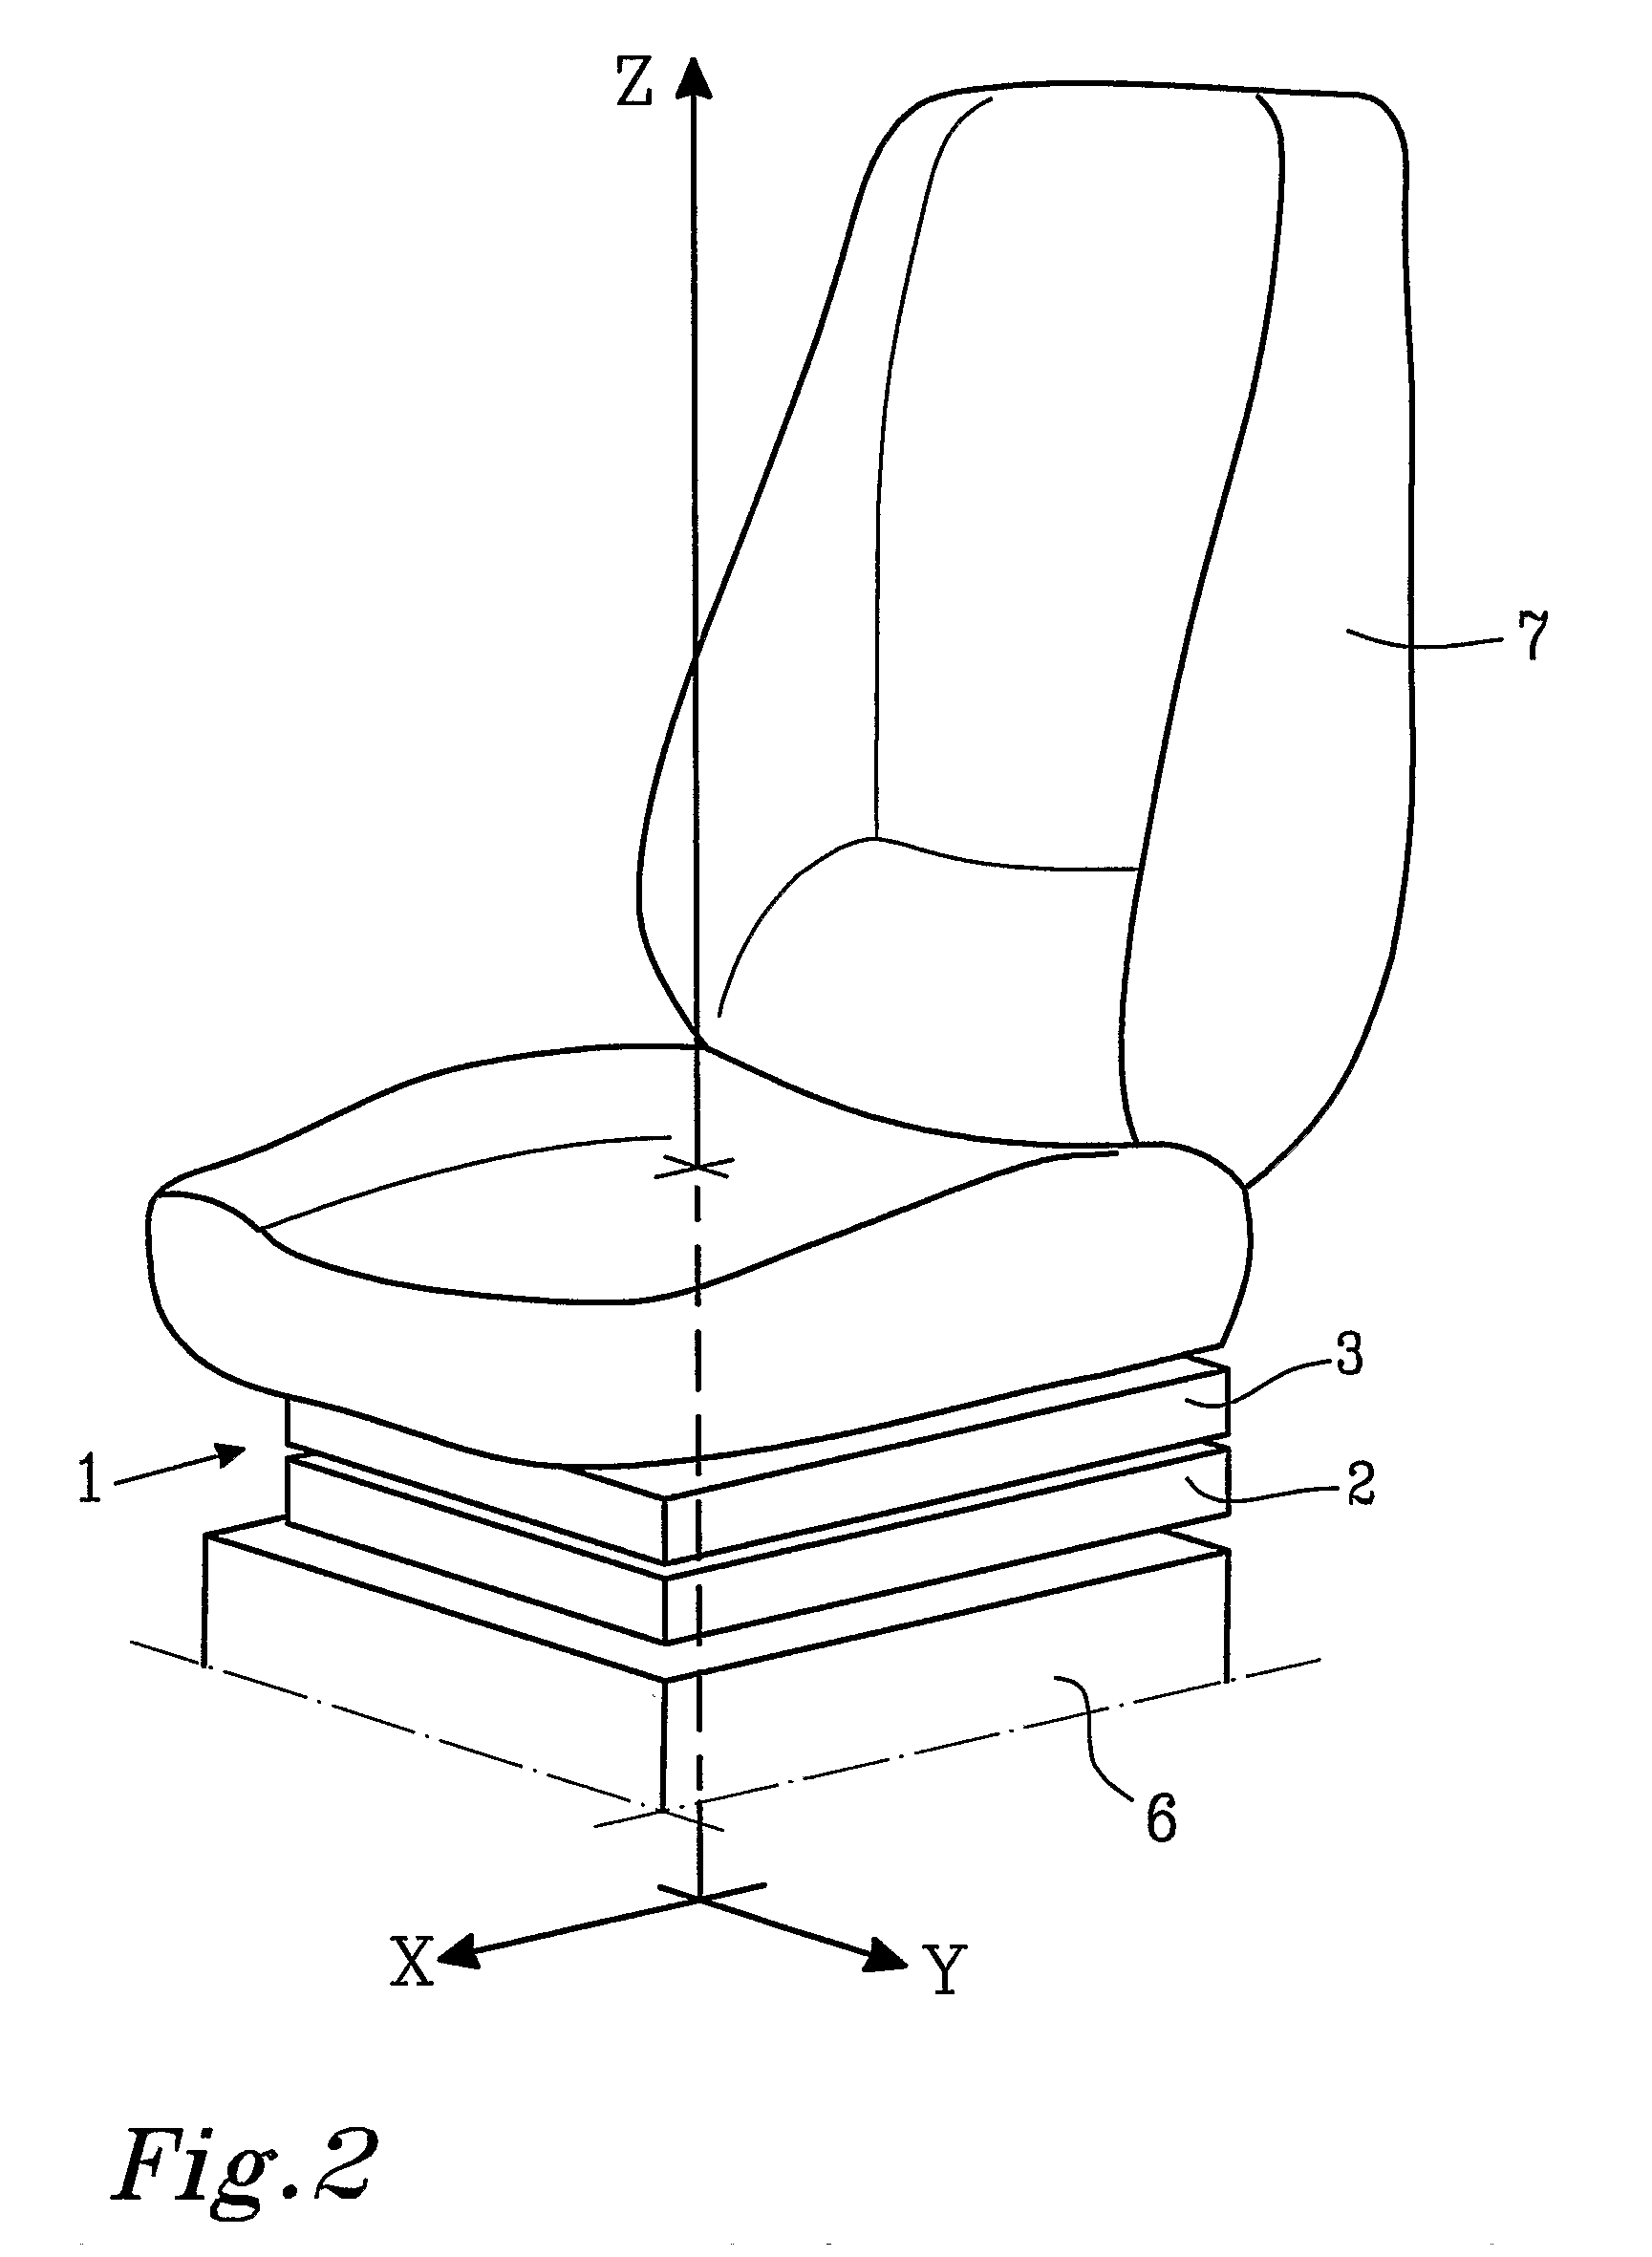 Vehicle seat mounting device